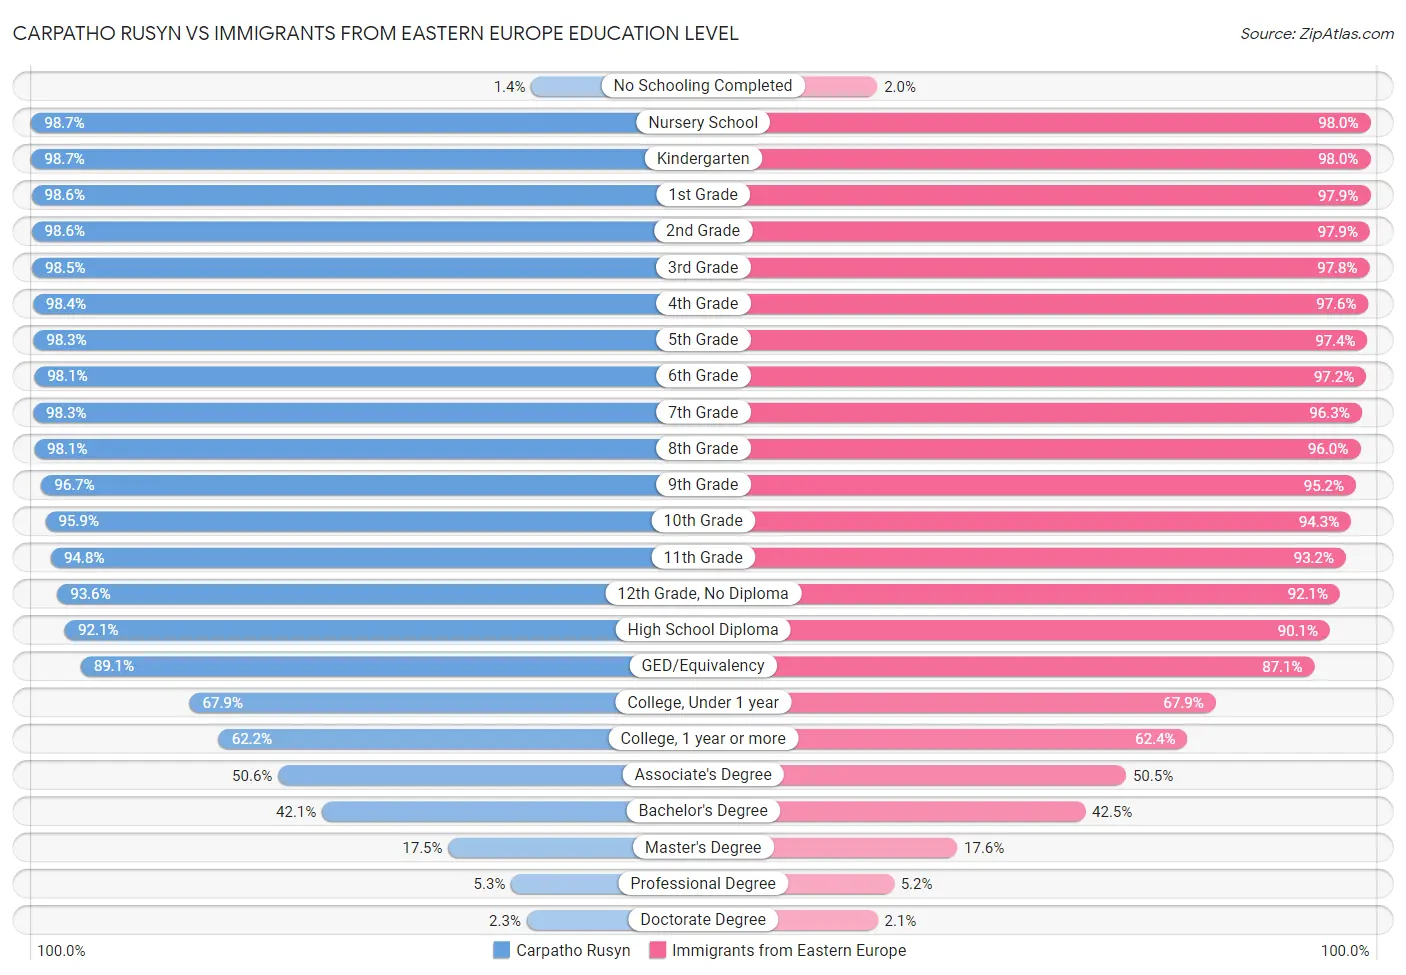 Carpatho Rusyn vs Immigrants from Eastern Europe Education Level